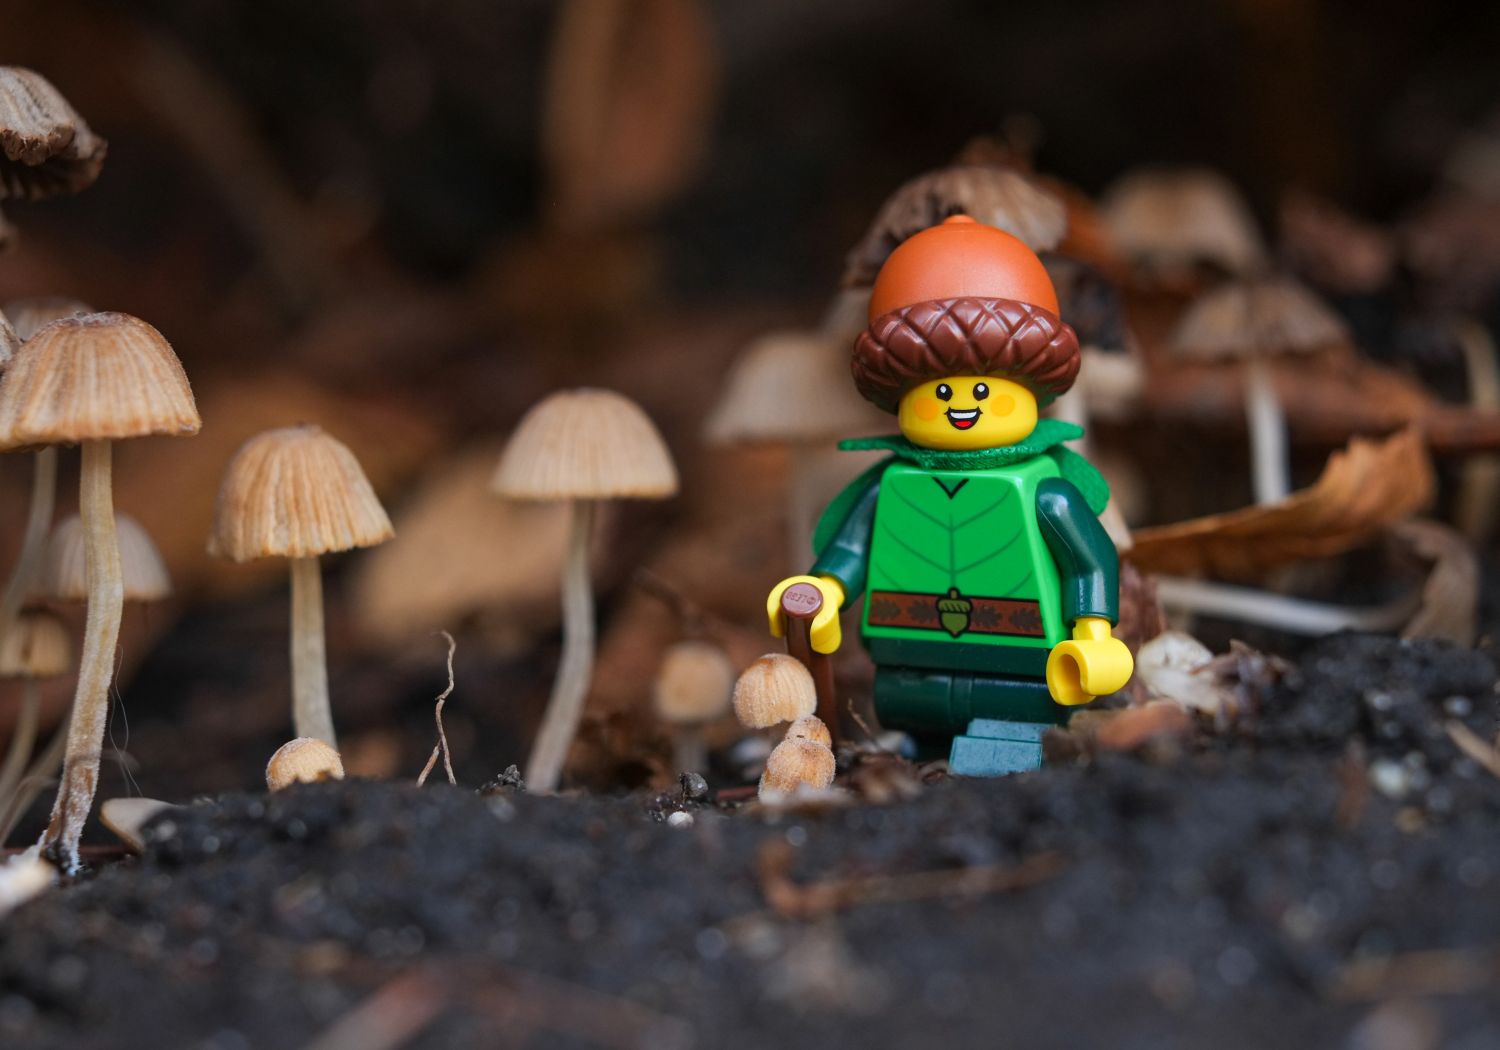 Lego 22nd CMF series Forest Elf encountering various mishroooms.